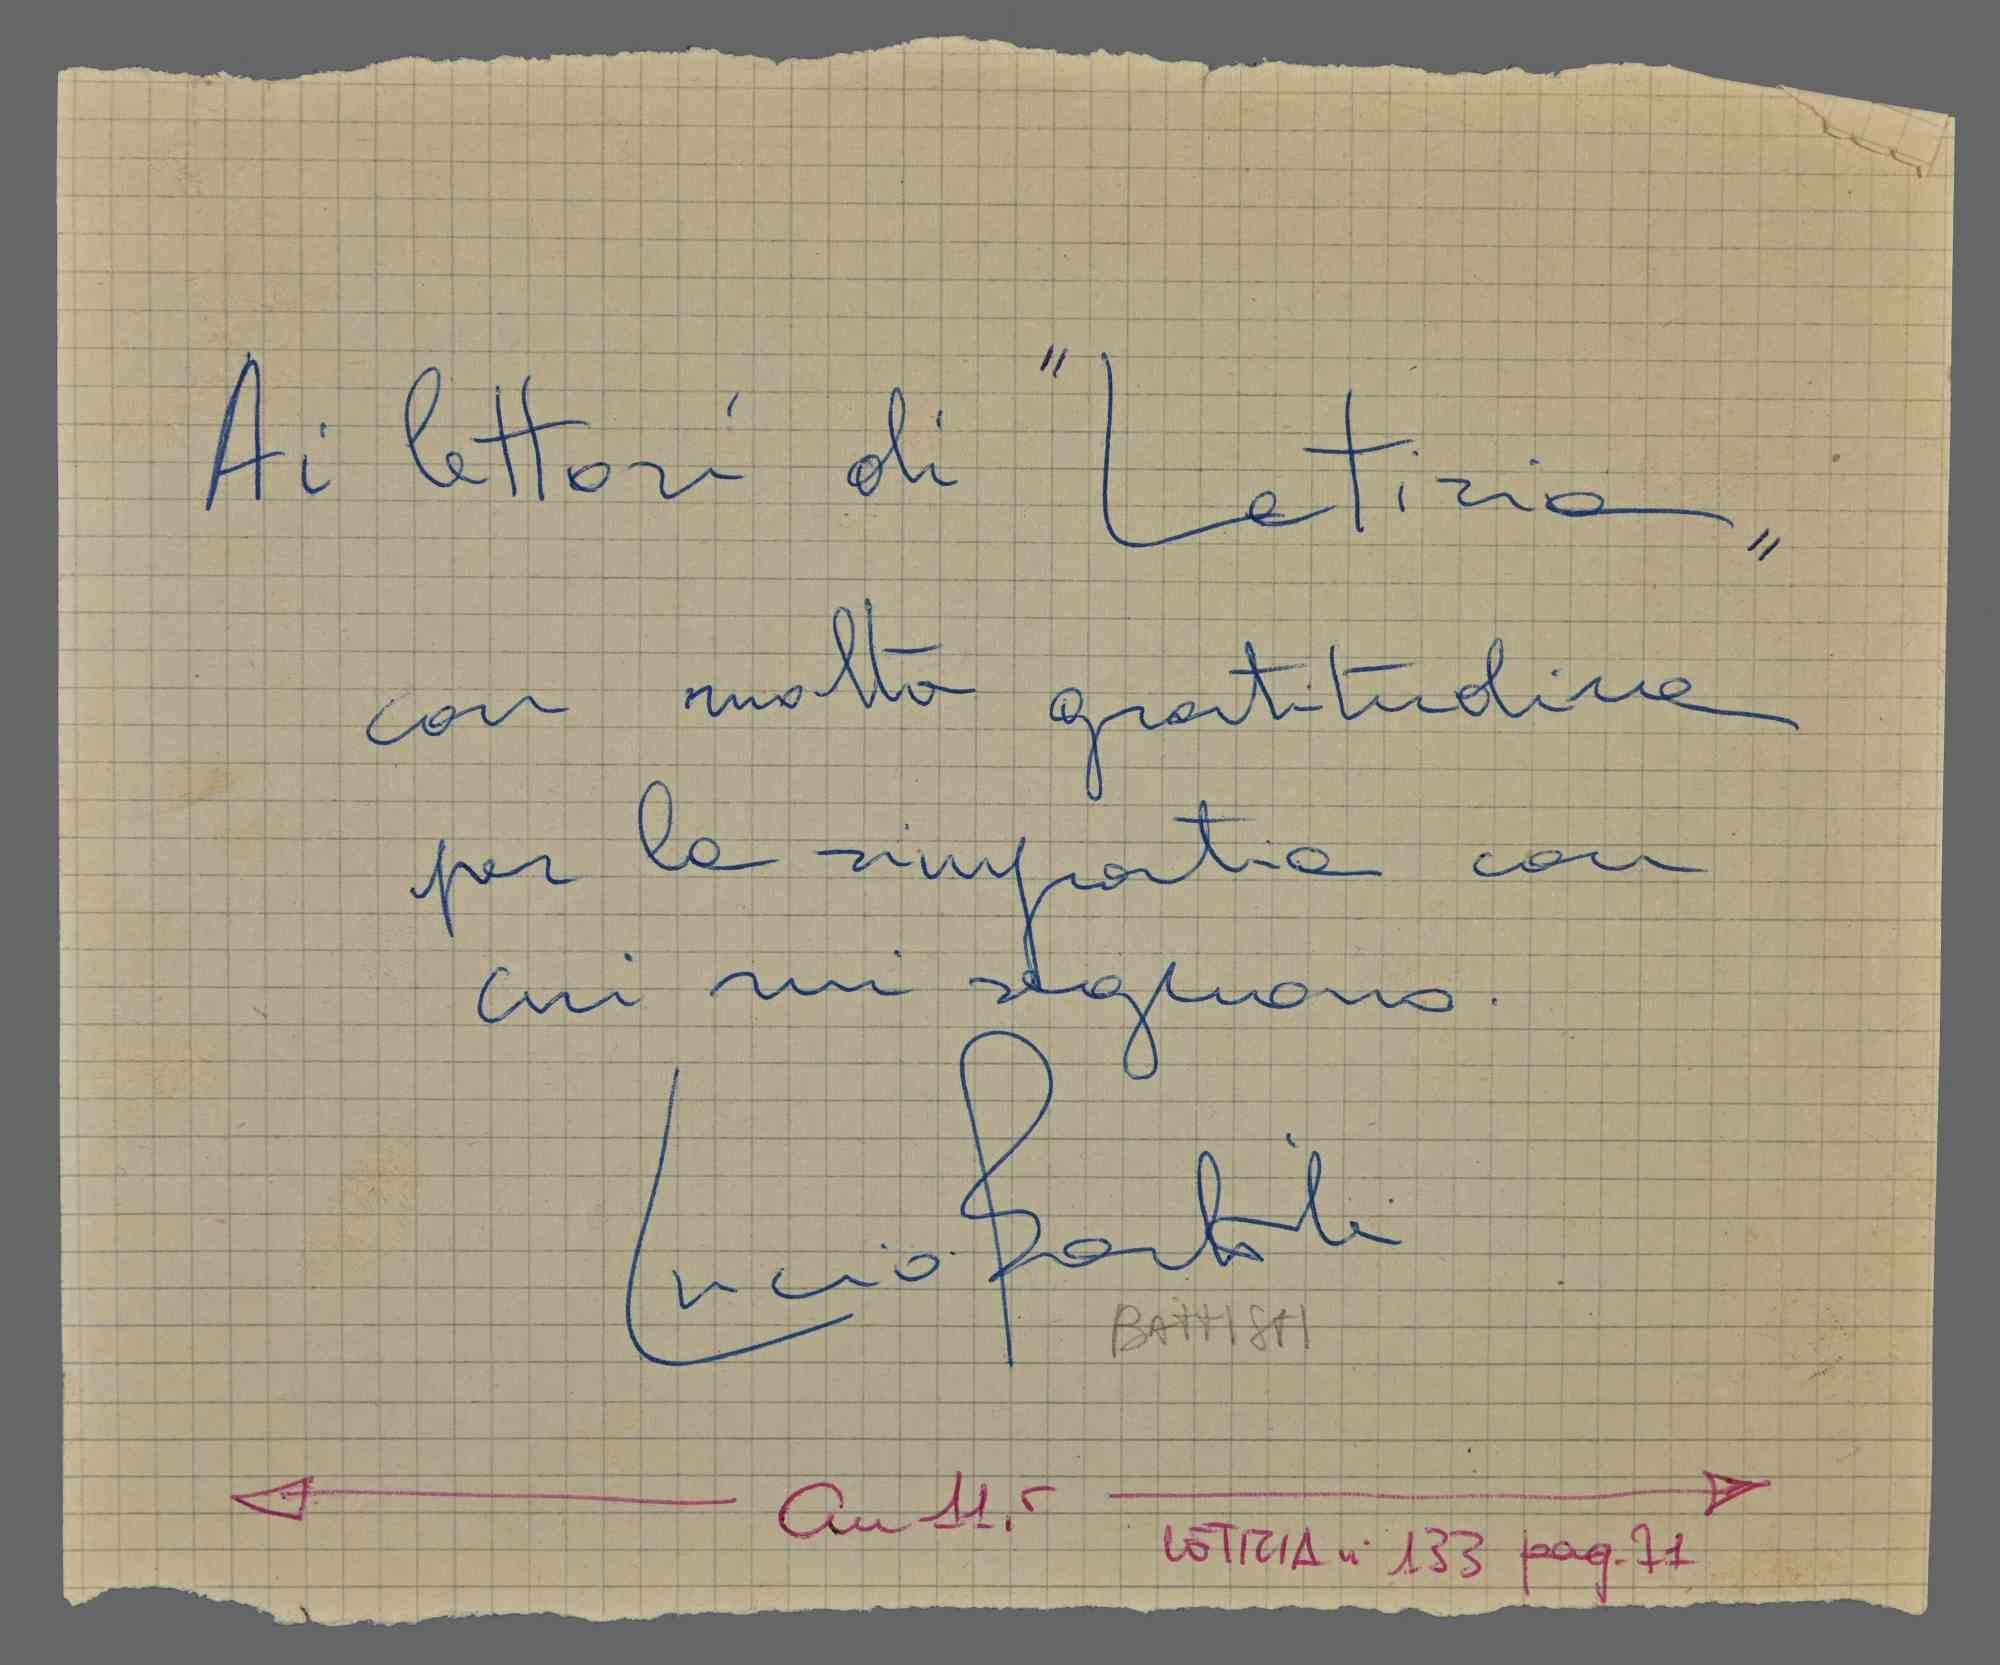 Autograph on Squared Paper by Lucio Battisti  - 1970s - Art by Unknown